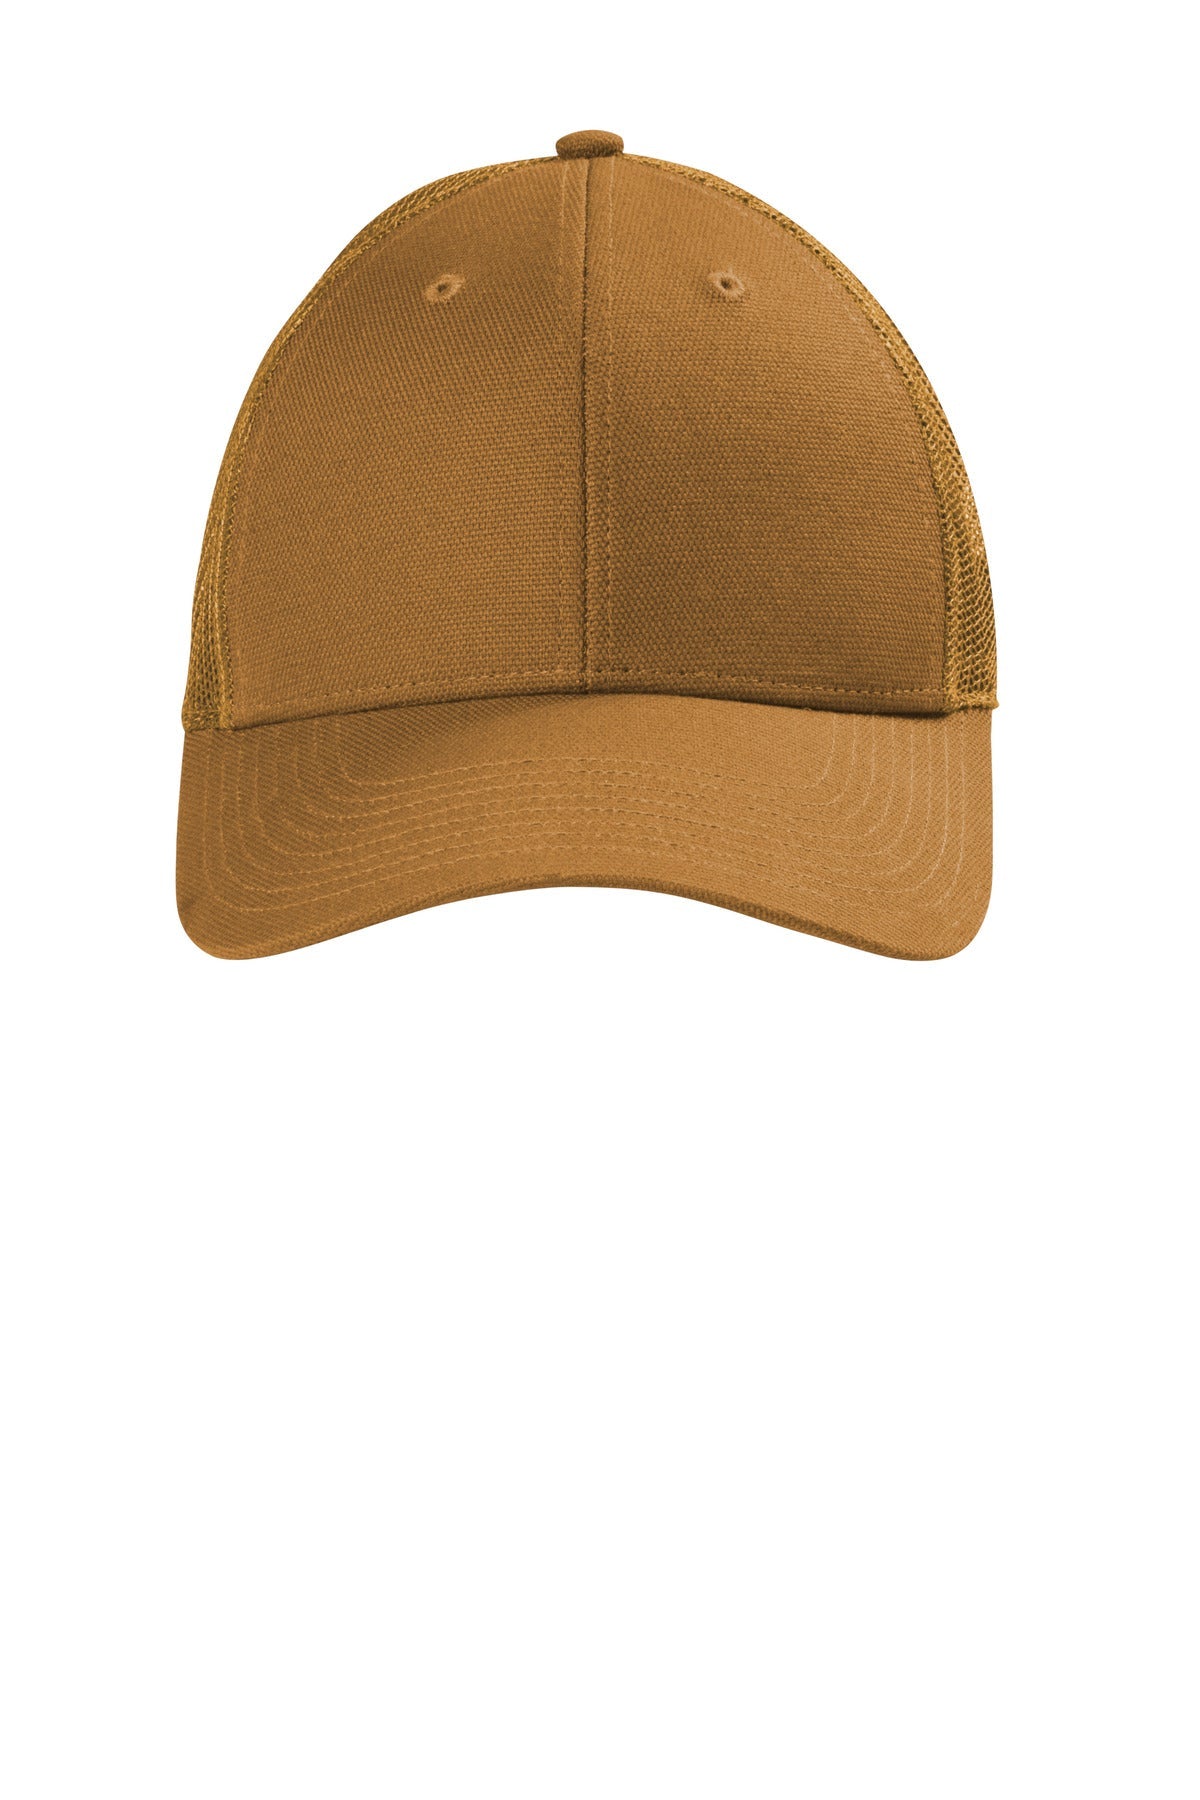 CornerStone® Canvas Mesh Back Cap. CS811 - DFW Impression